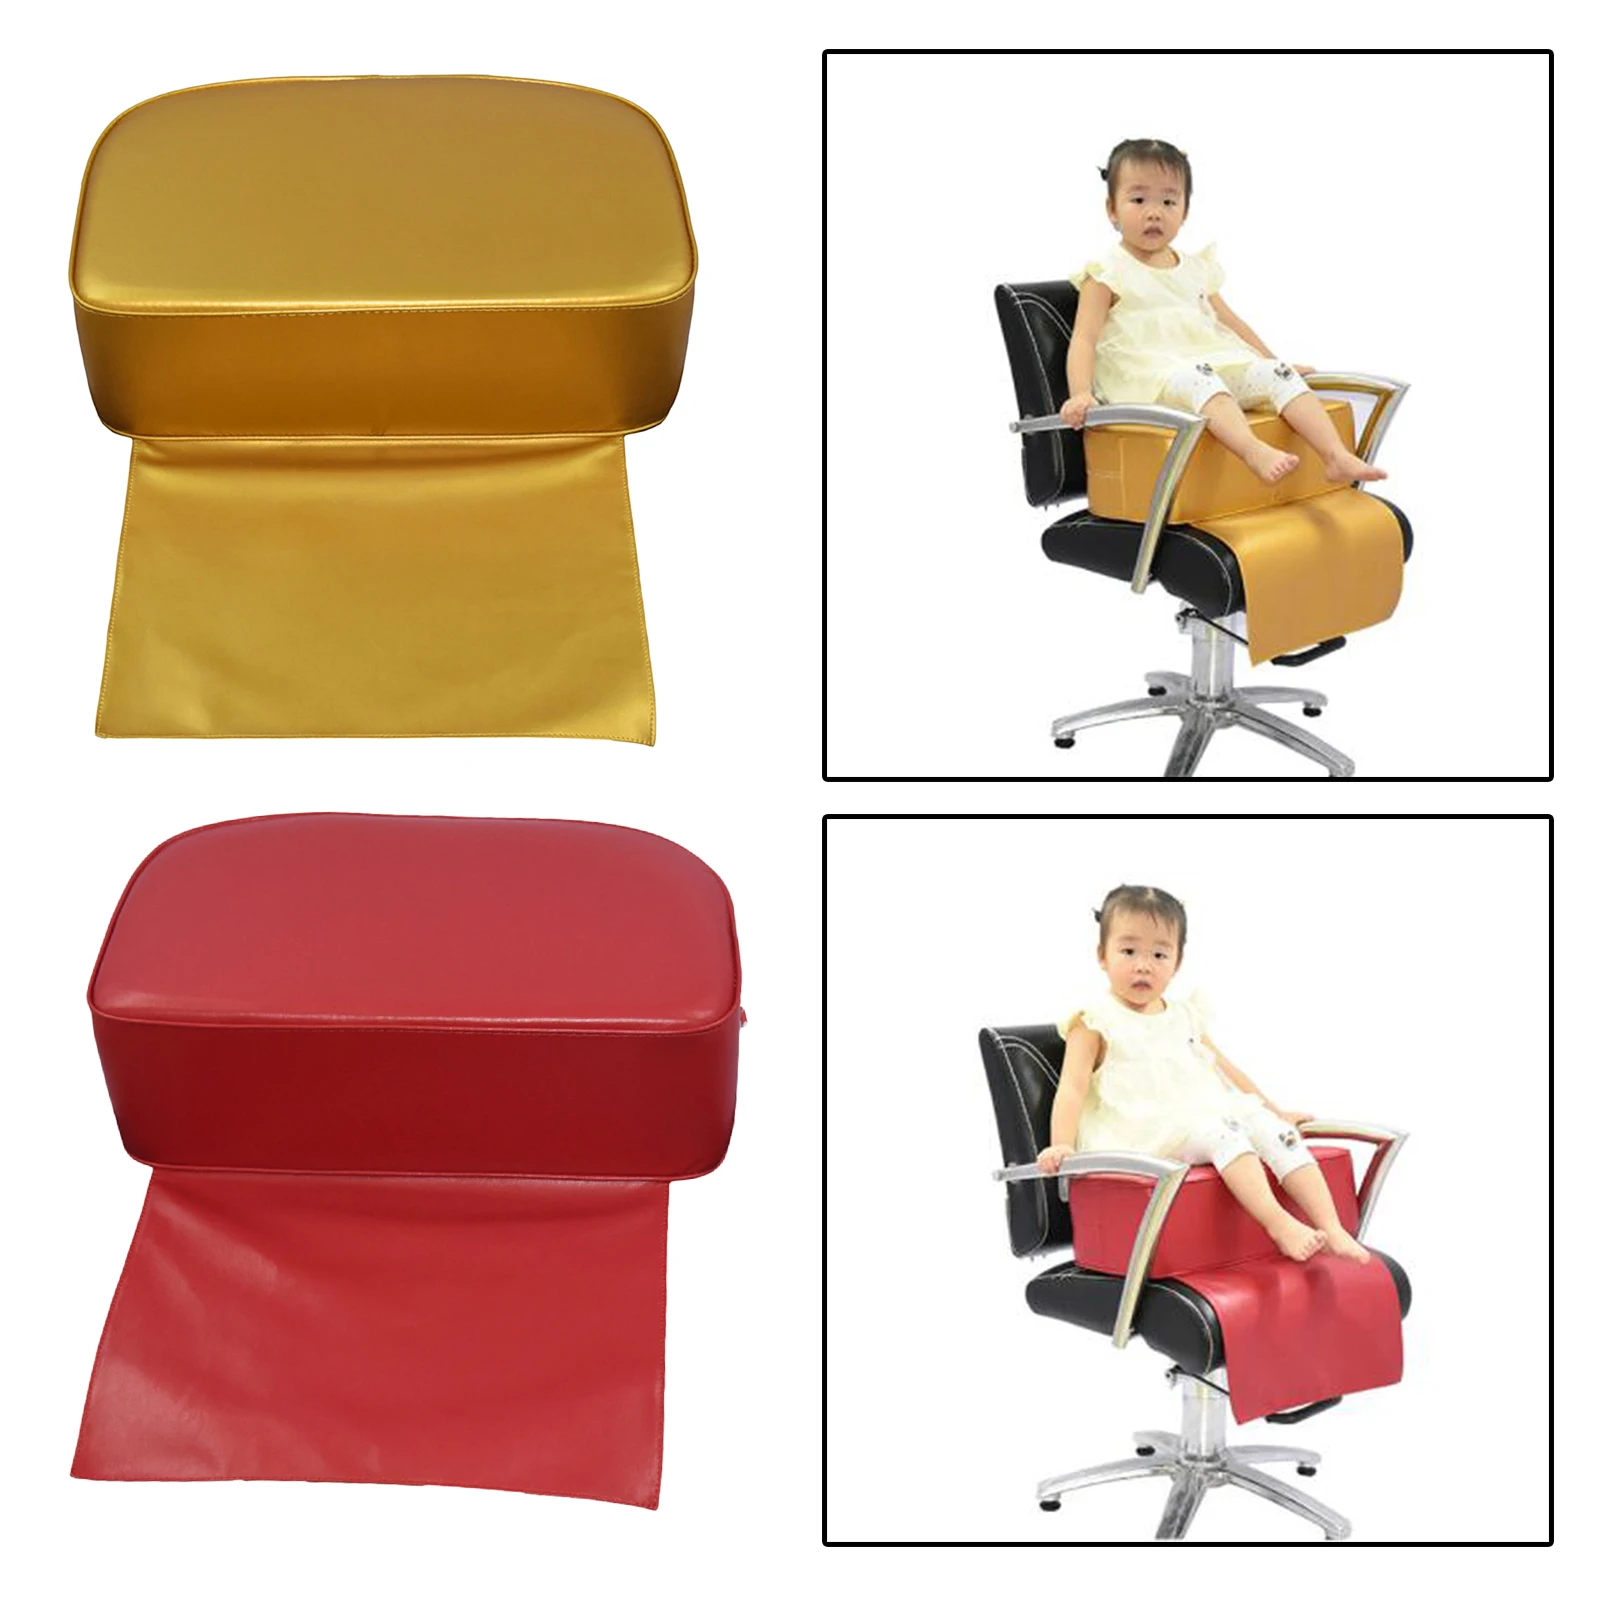 Salon Booster Seat Cushion for Child Hair Cutting, Cushion for Styling Chair, Barber Beauty Salon Spa Equipment